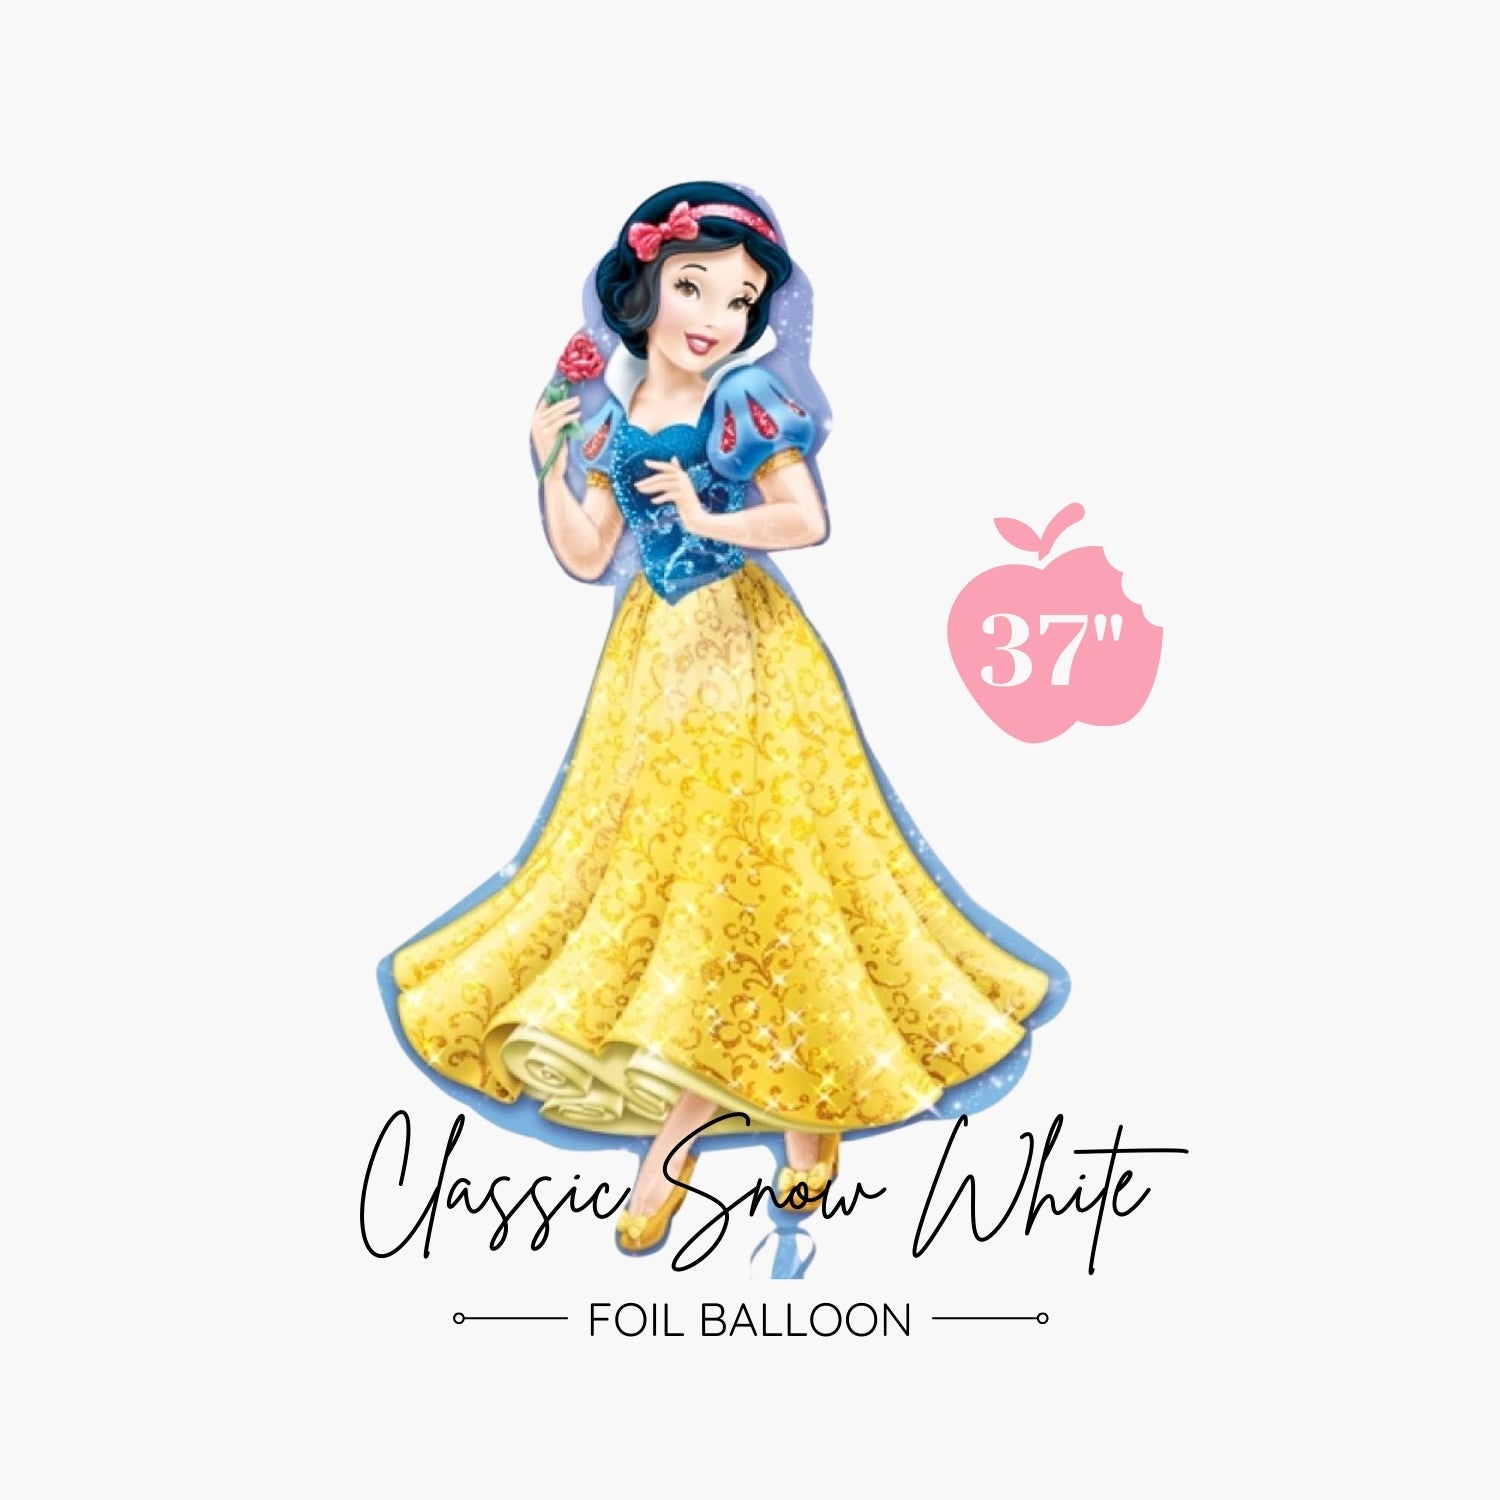 Jumbo Classic Snow White Foil Balloon 37" - Disney Licensed - Girls Princess Party Decors